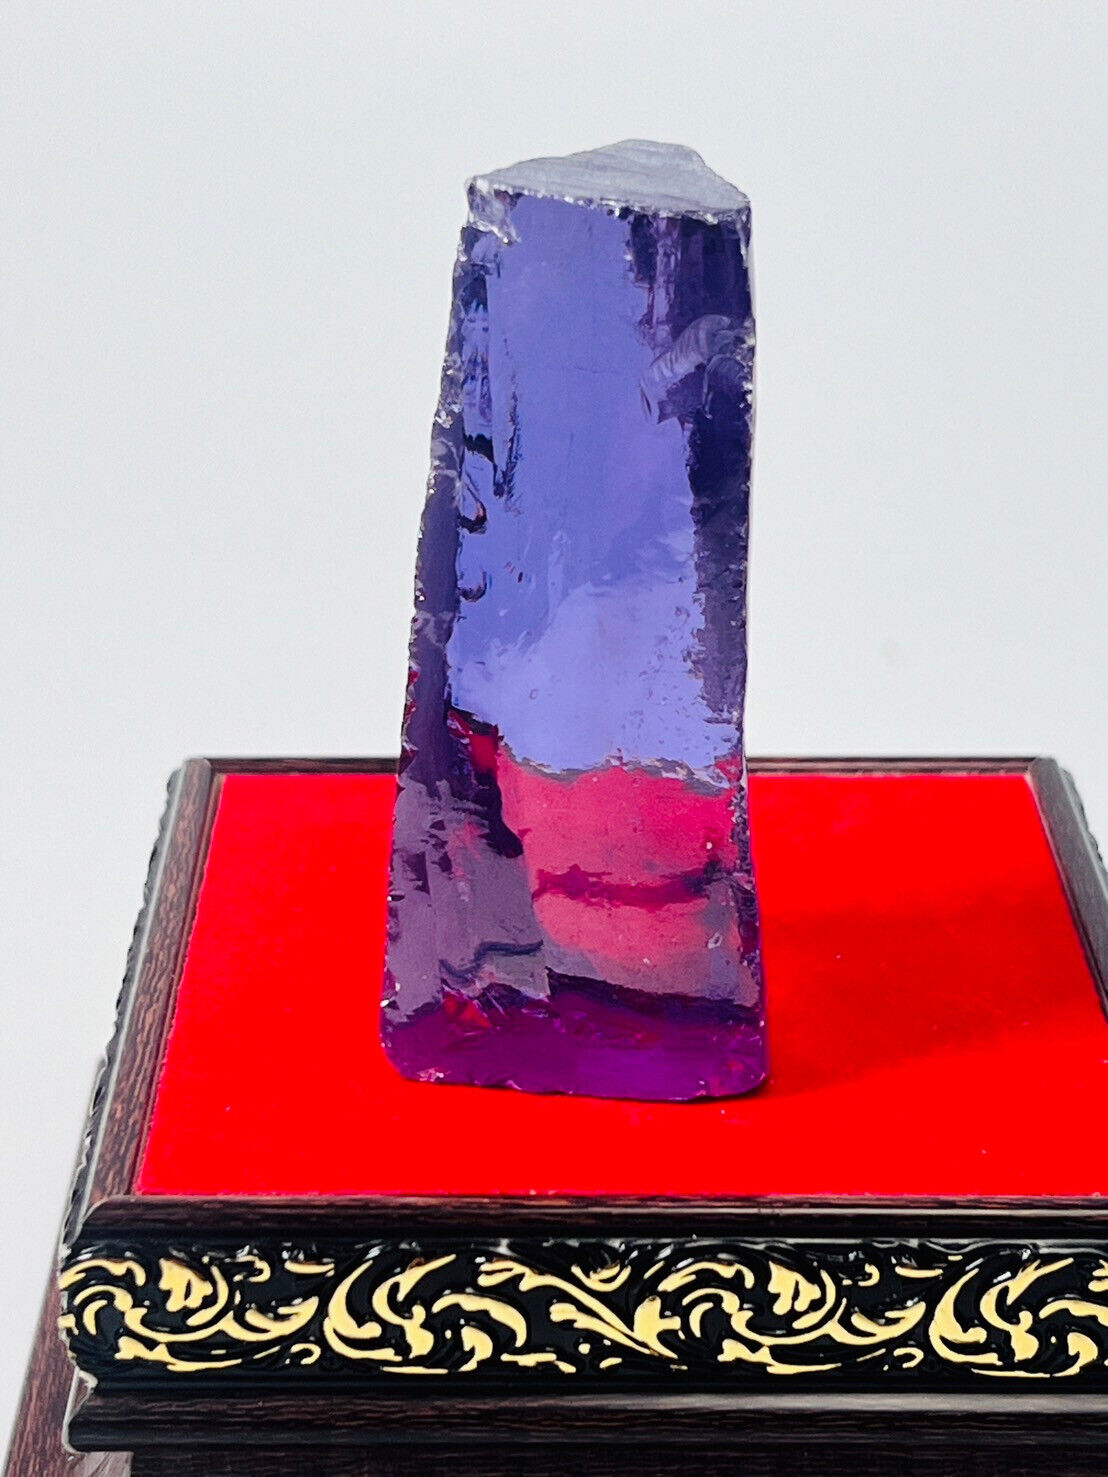 Lavender Energetic Phet Phaya nak Crystal stone Spiritual Journey fortune amulet